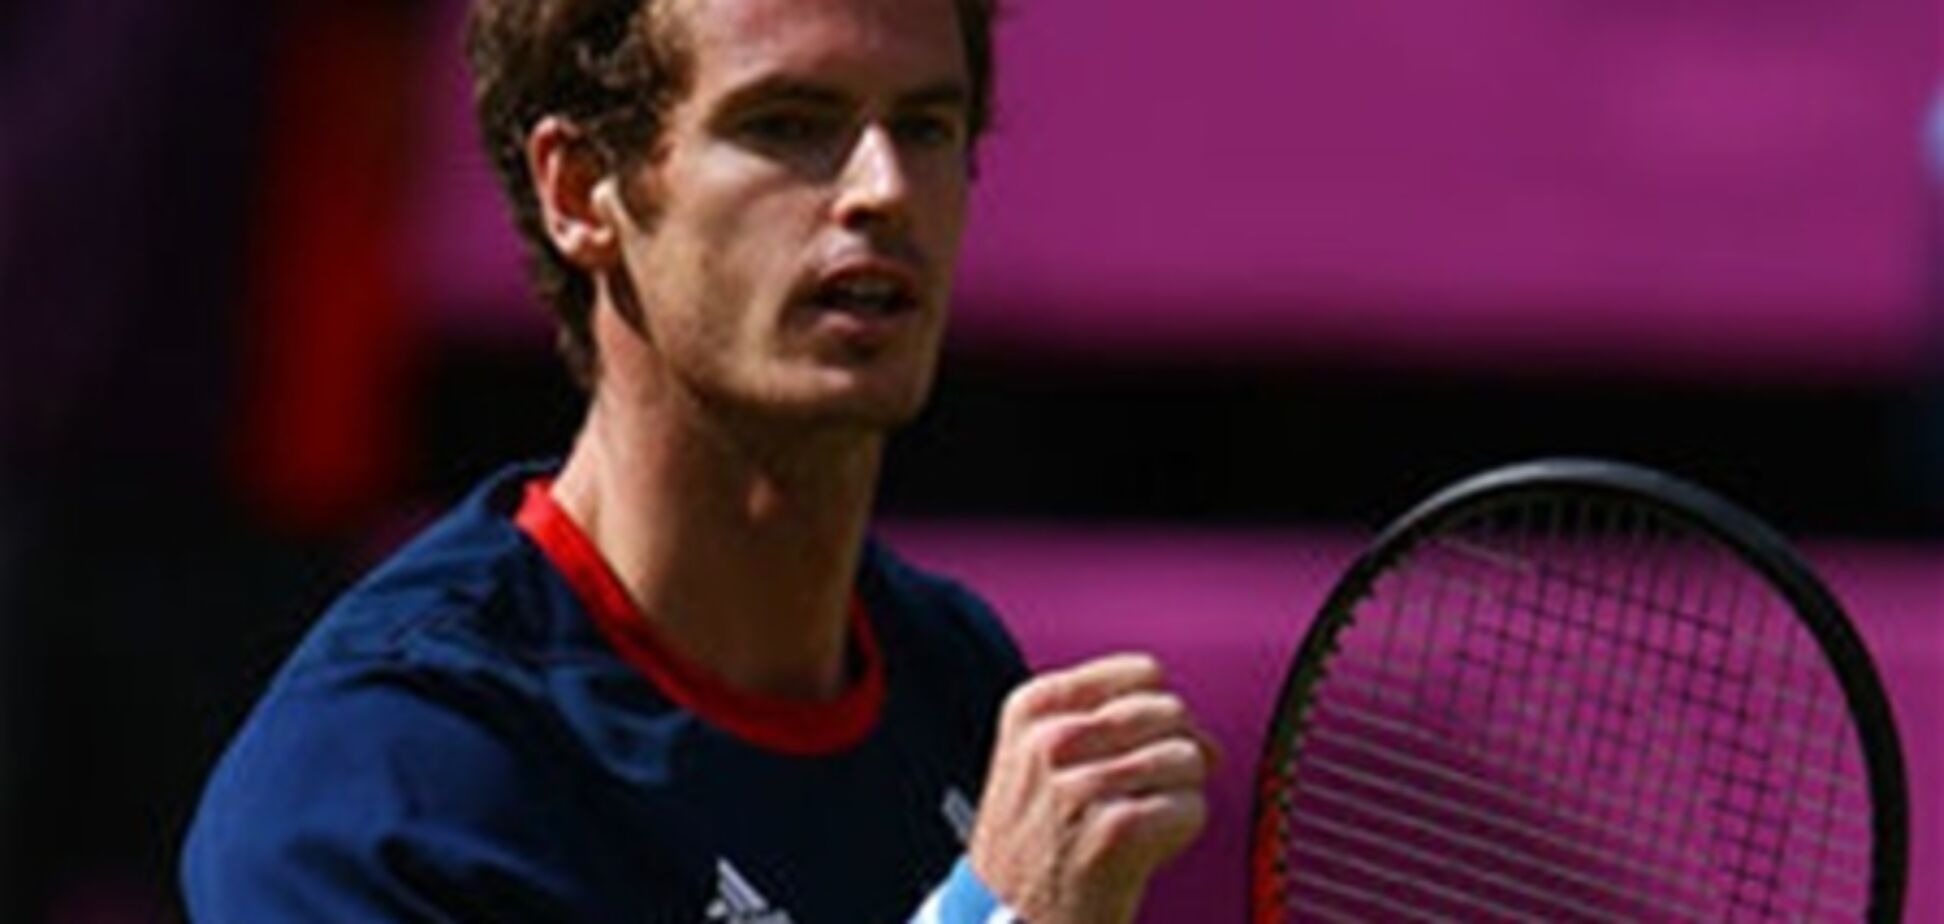 Олимпиада. Теннис: британец в финале 'нокаутировал' знаменитого Федерера